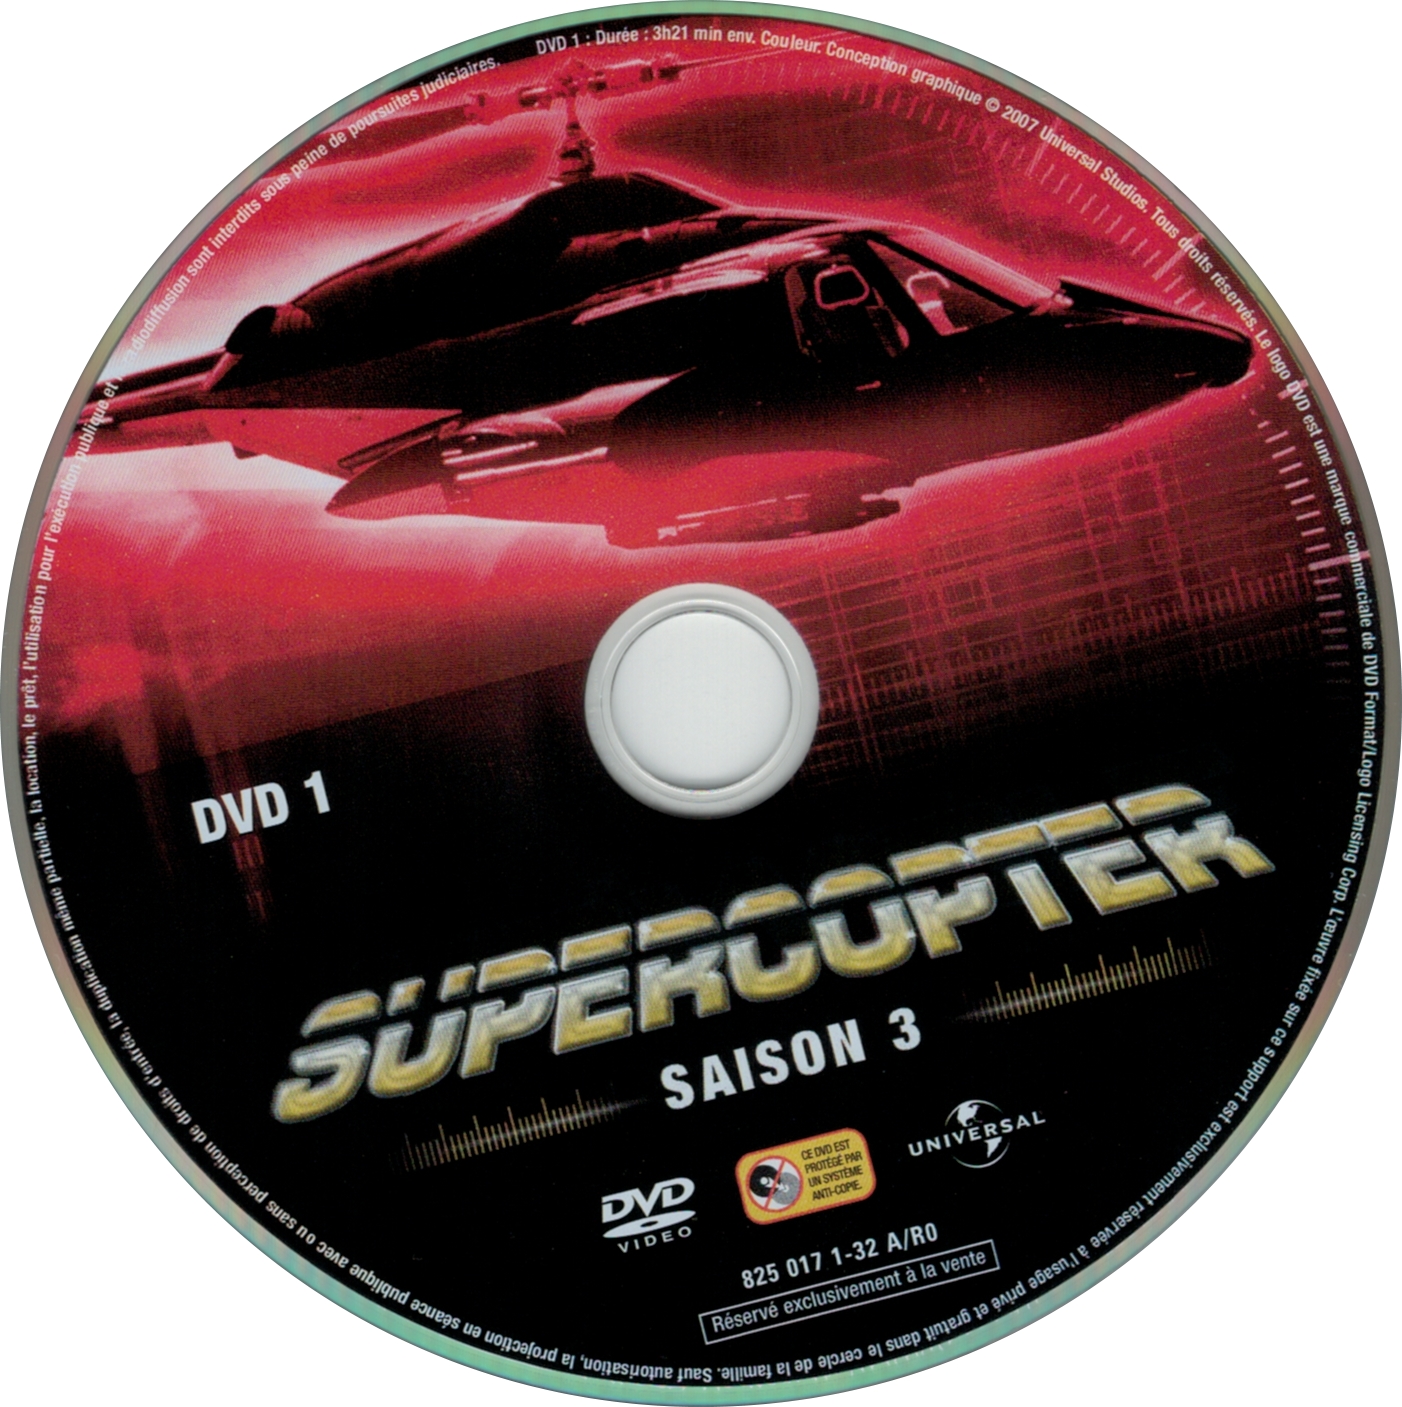 Supercopter Saison 3 DVD 1